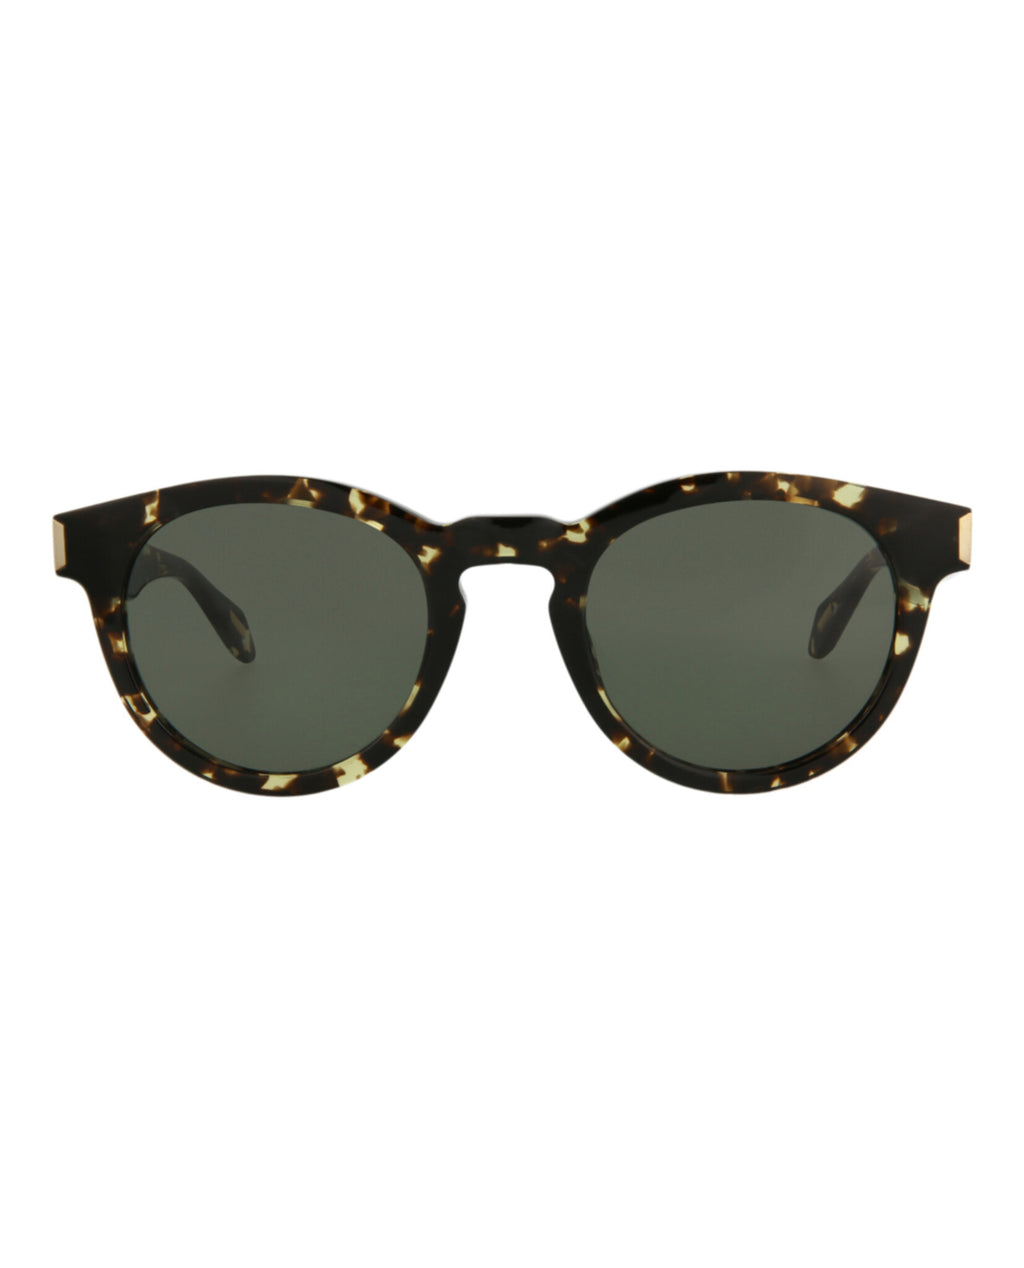 Just Cavalli Core Sunglasses Style # Style #SJC025K– Ruumur